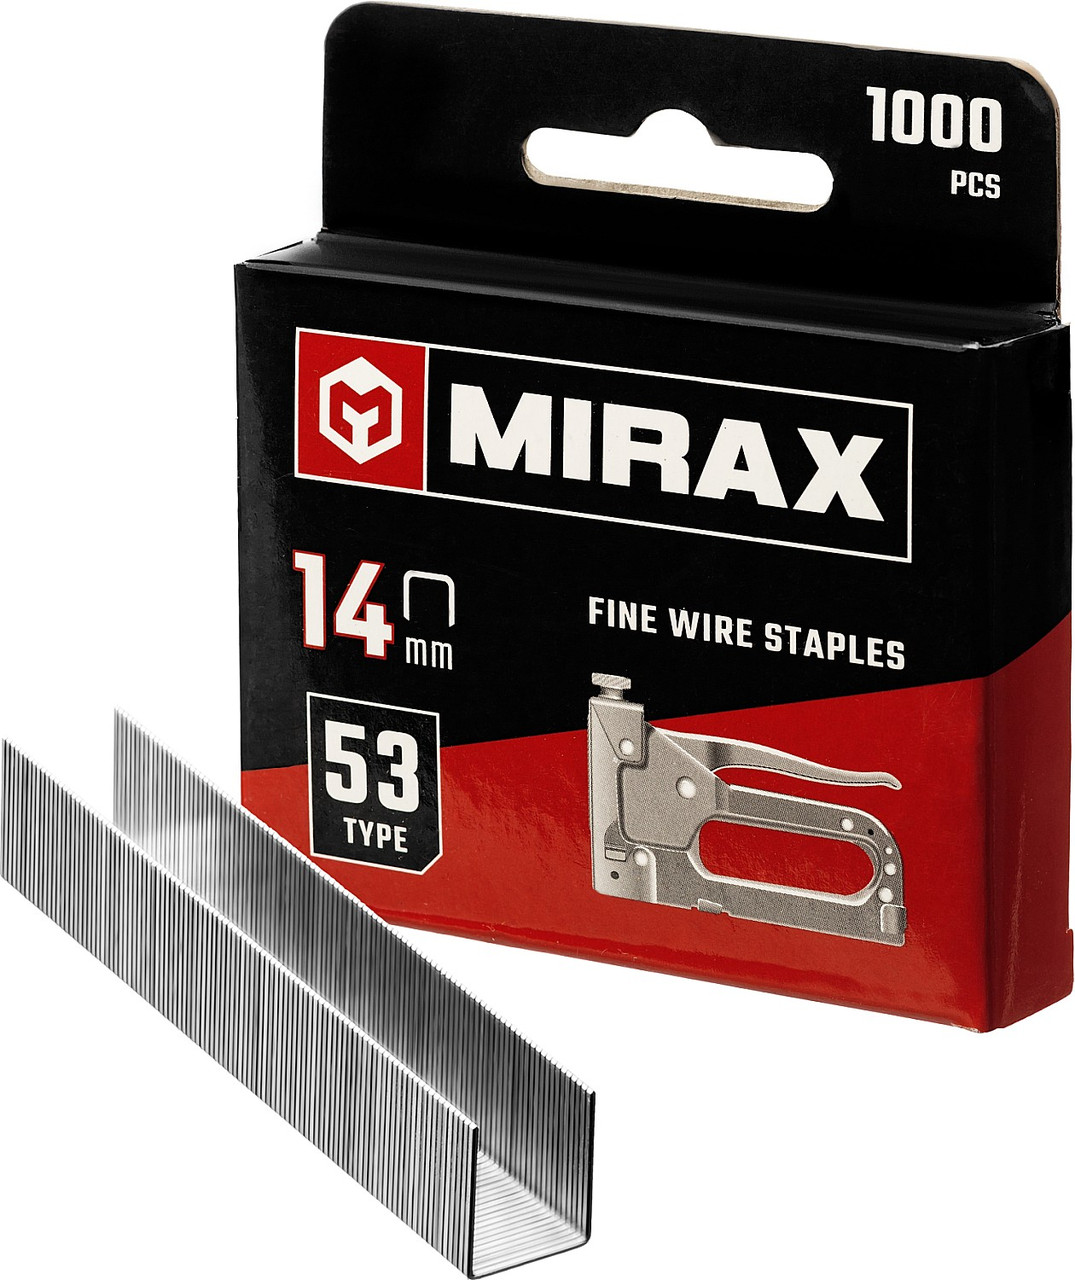 MIRAX 14 мм скобы для степлера узкие тип 53, 1000 шт